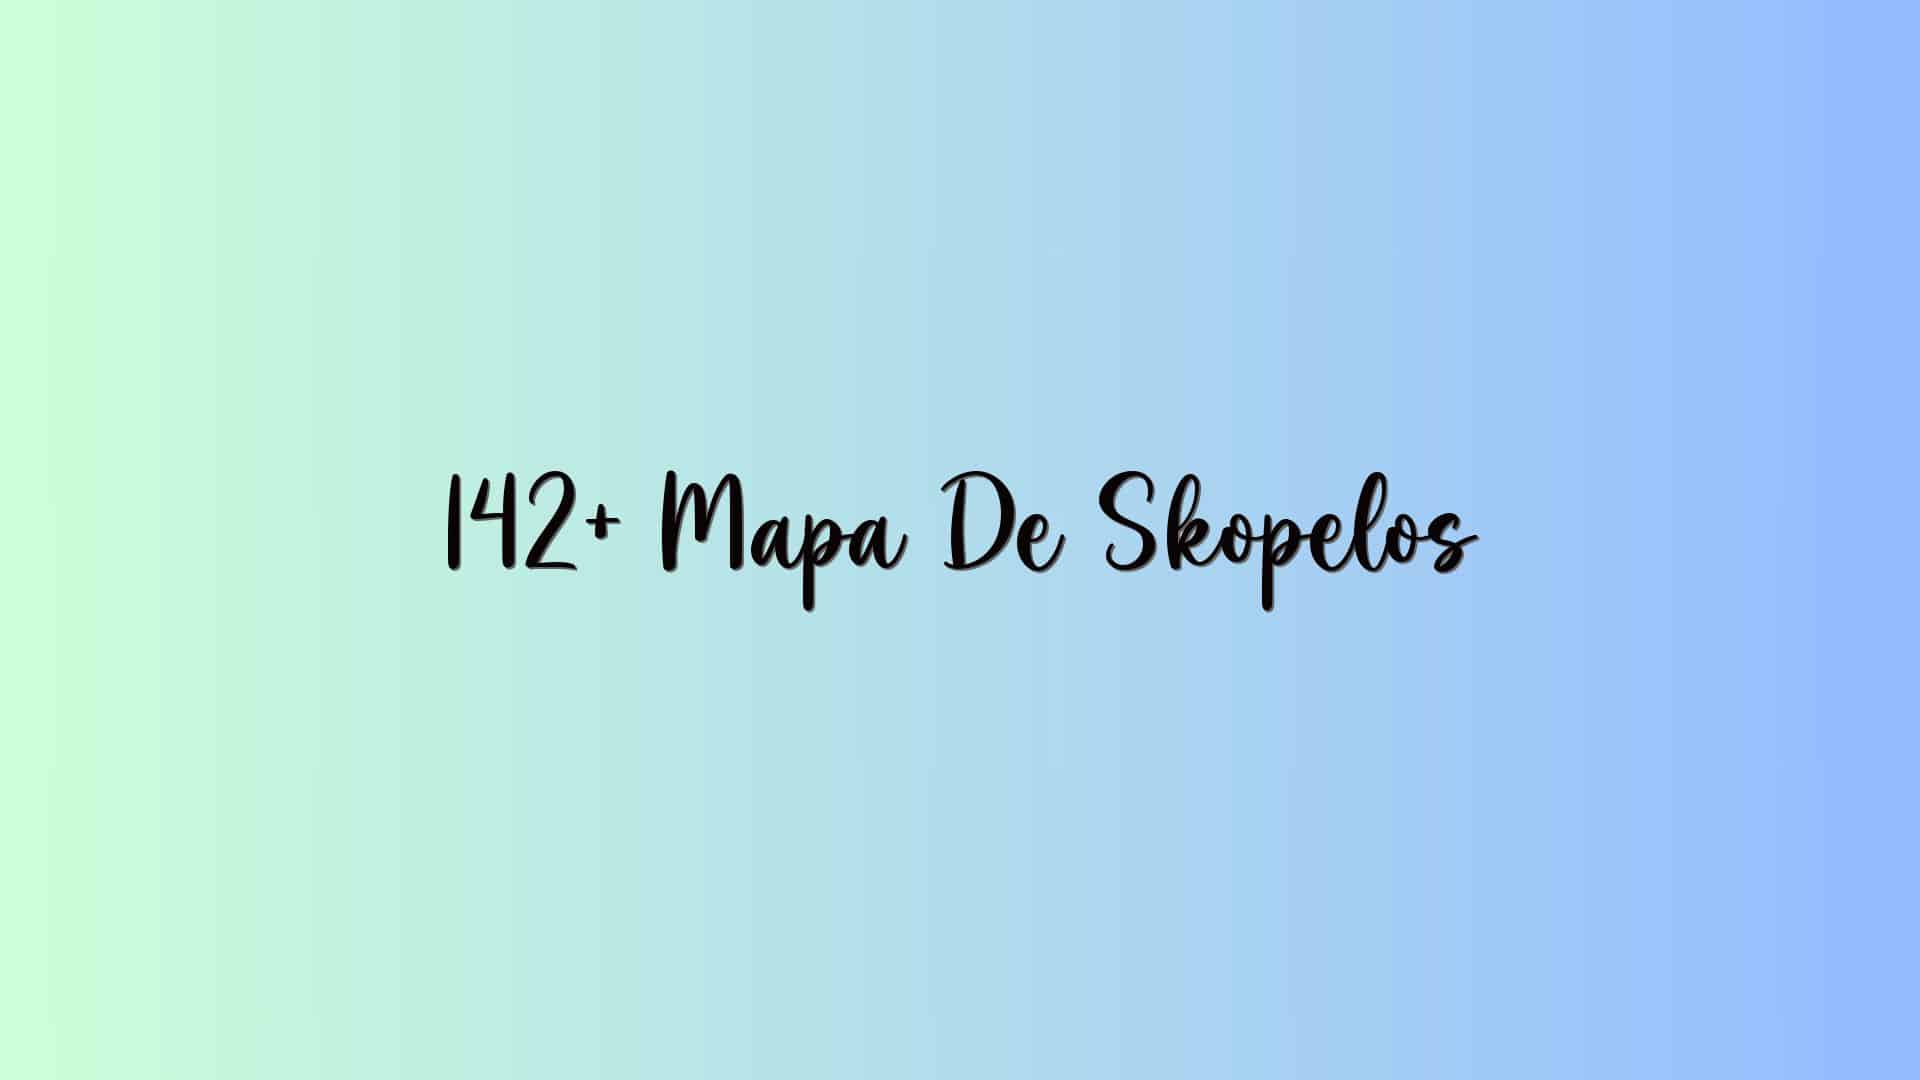 142+ Mapa De Skopelos